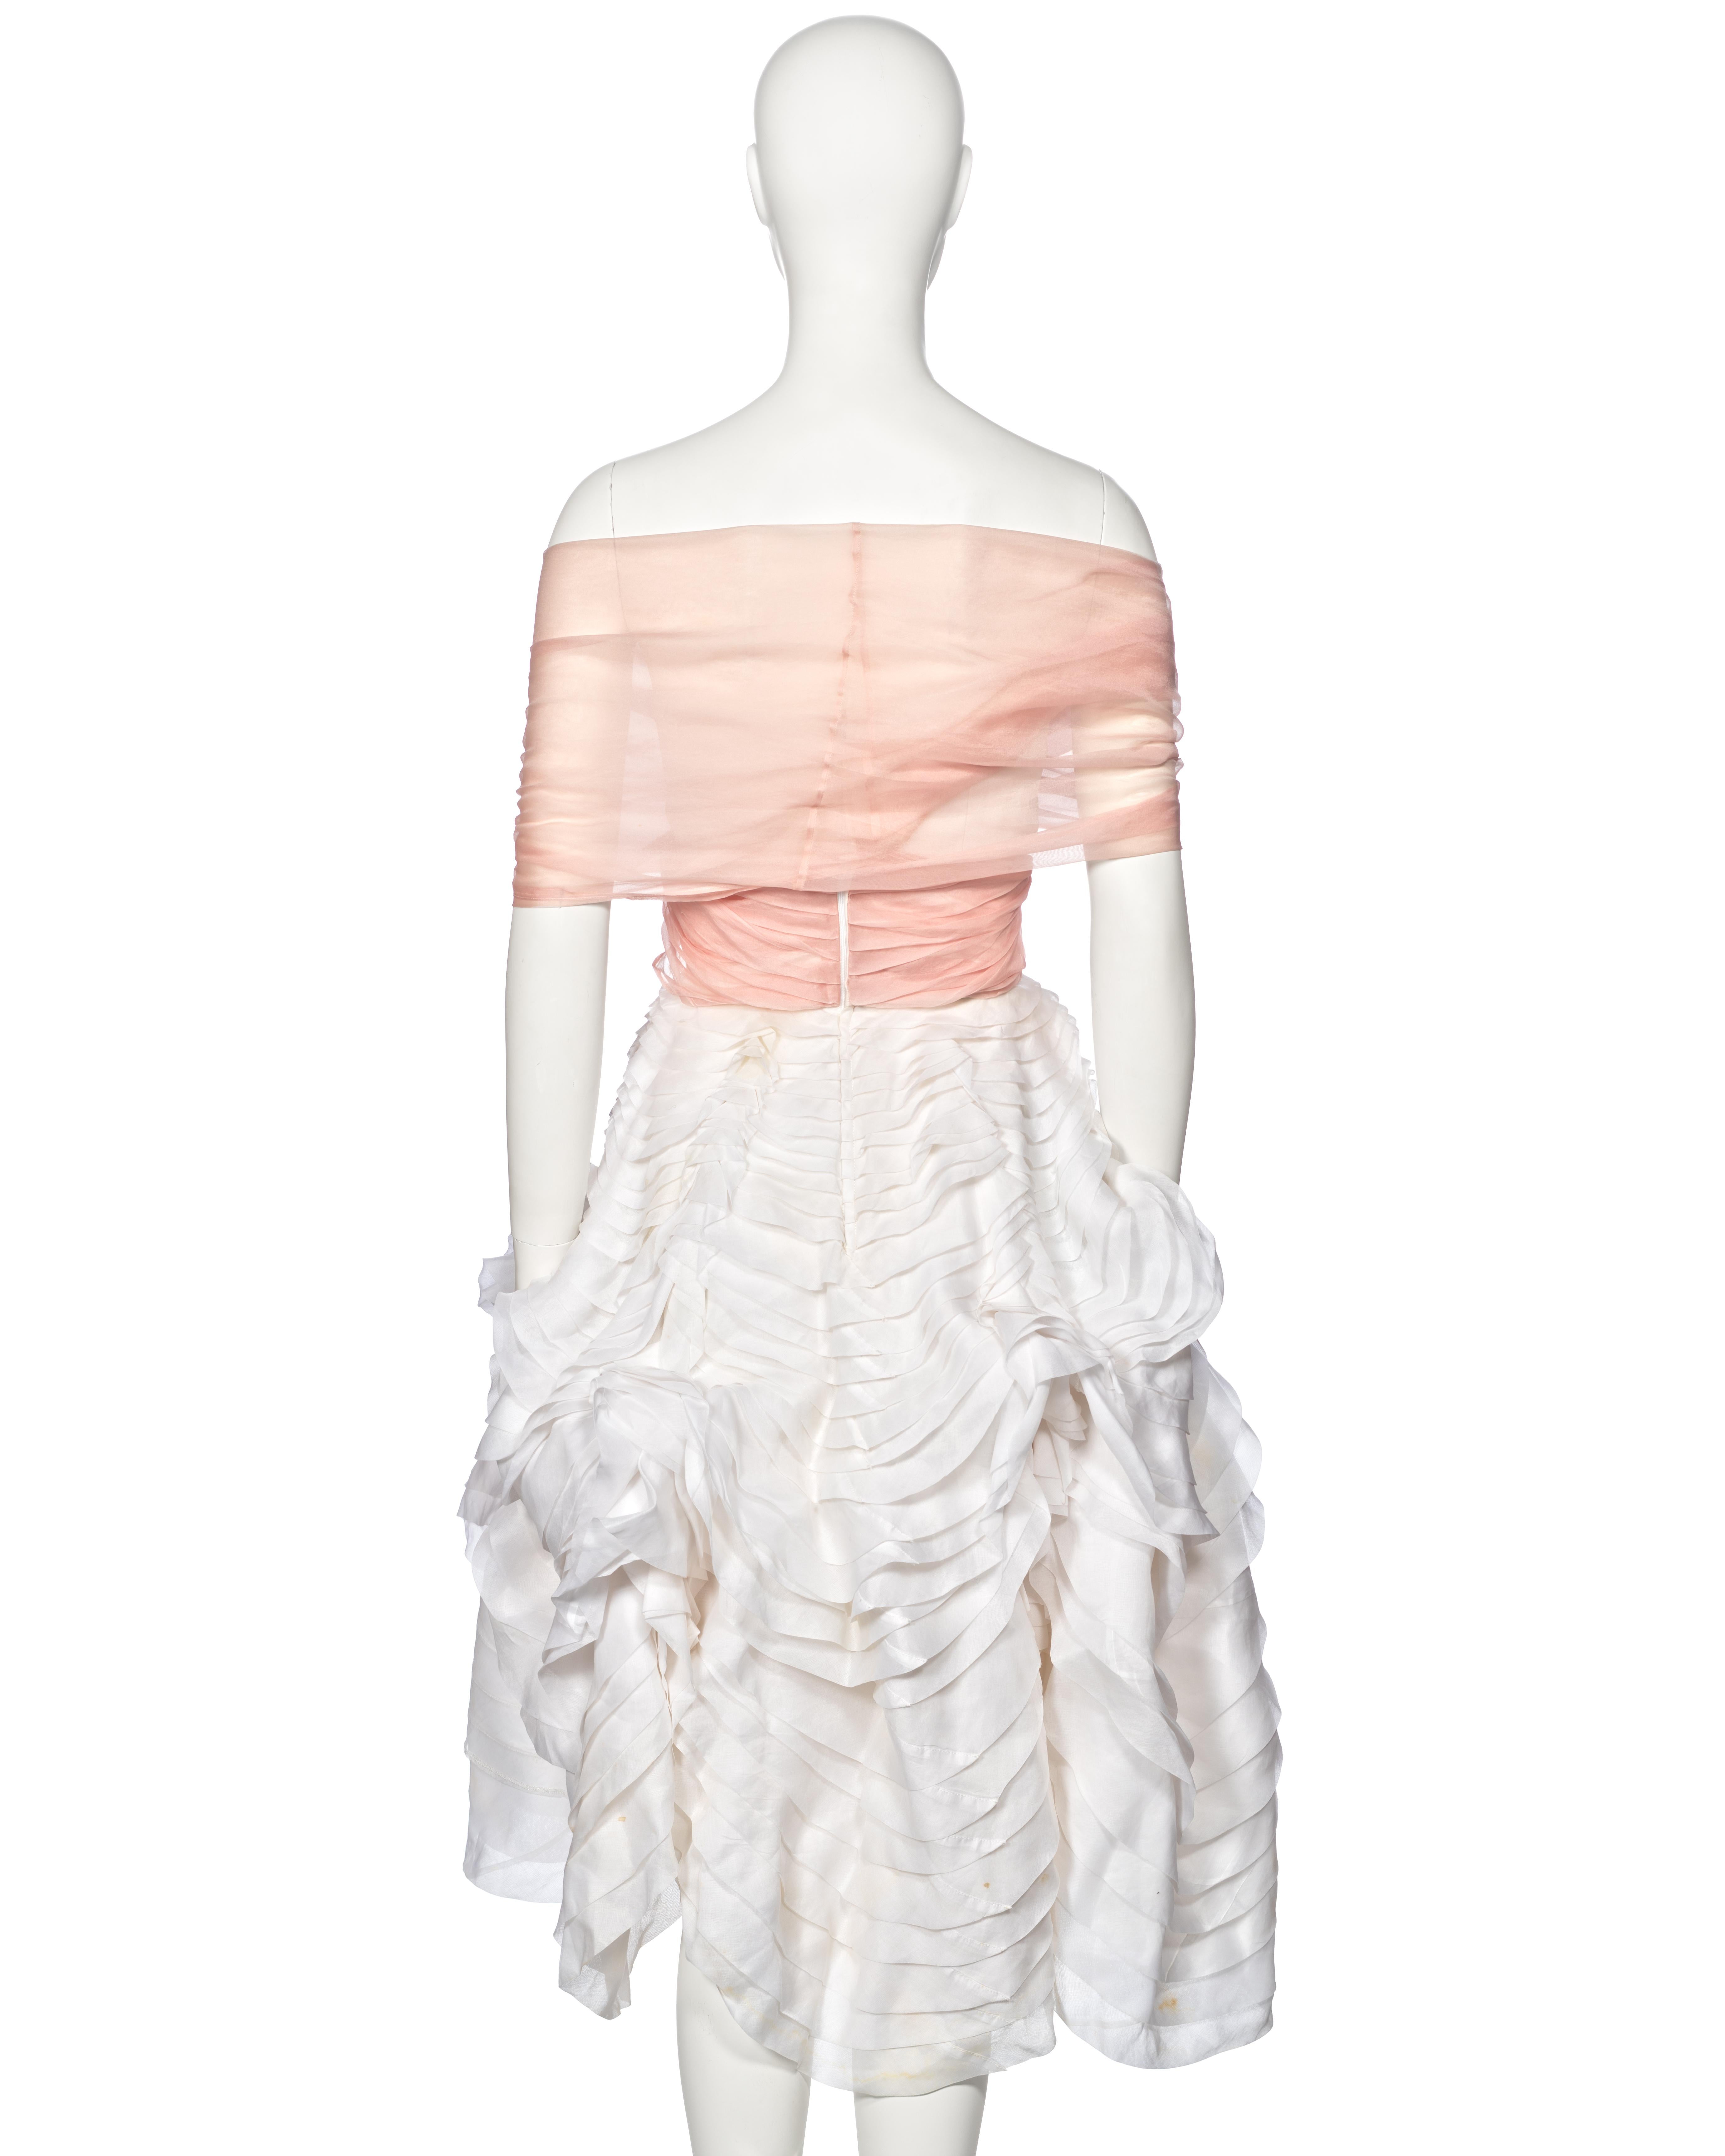 John Galliano Blanche DuBois Clam Dress, ss 1988 For Sale 5